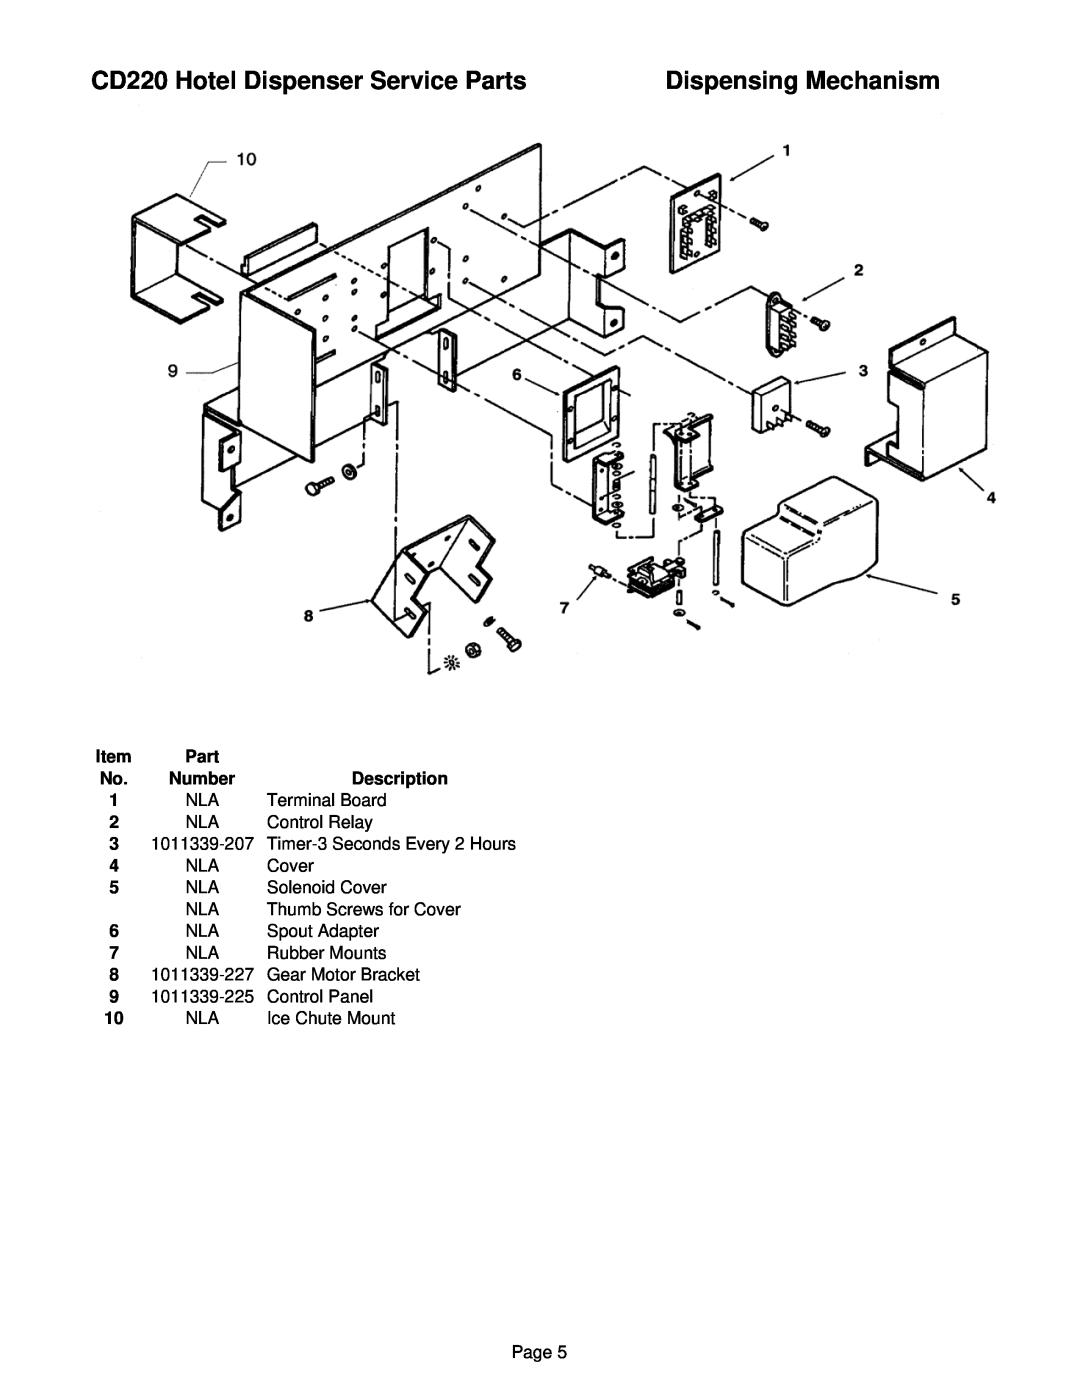 Ice-O-Matic manual Dispensing Mechanism, CD220 Hotel Dispenser Service Parts, Number, Description, Terminal Board 